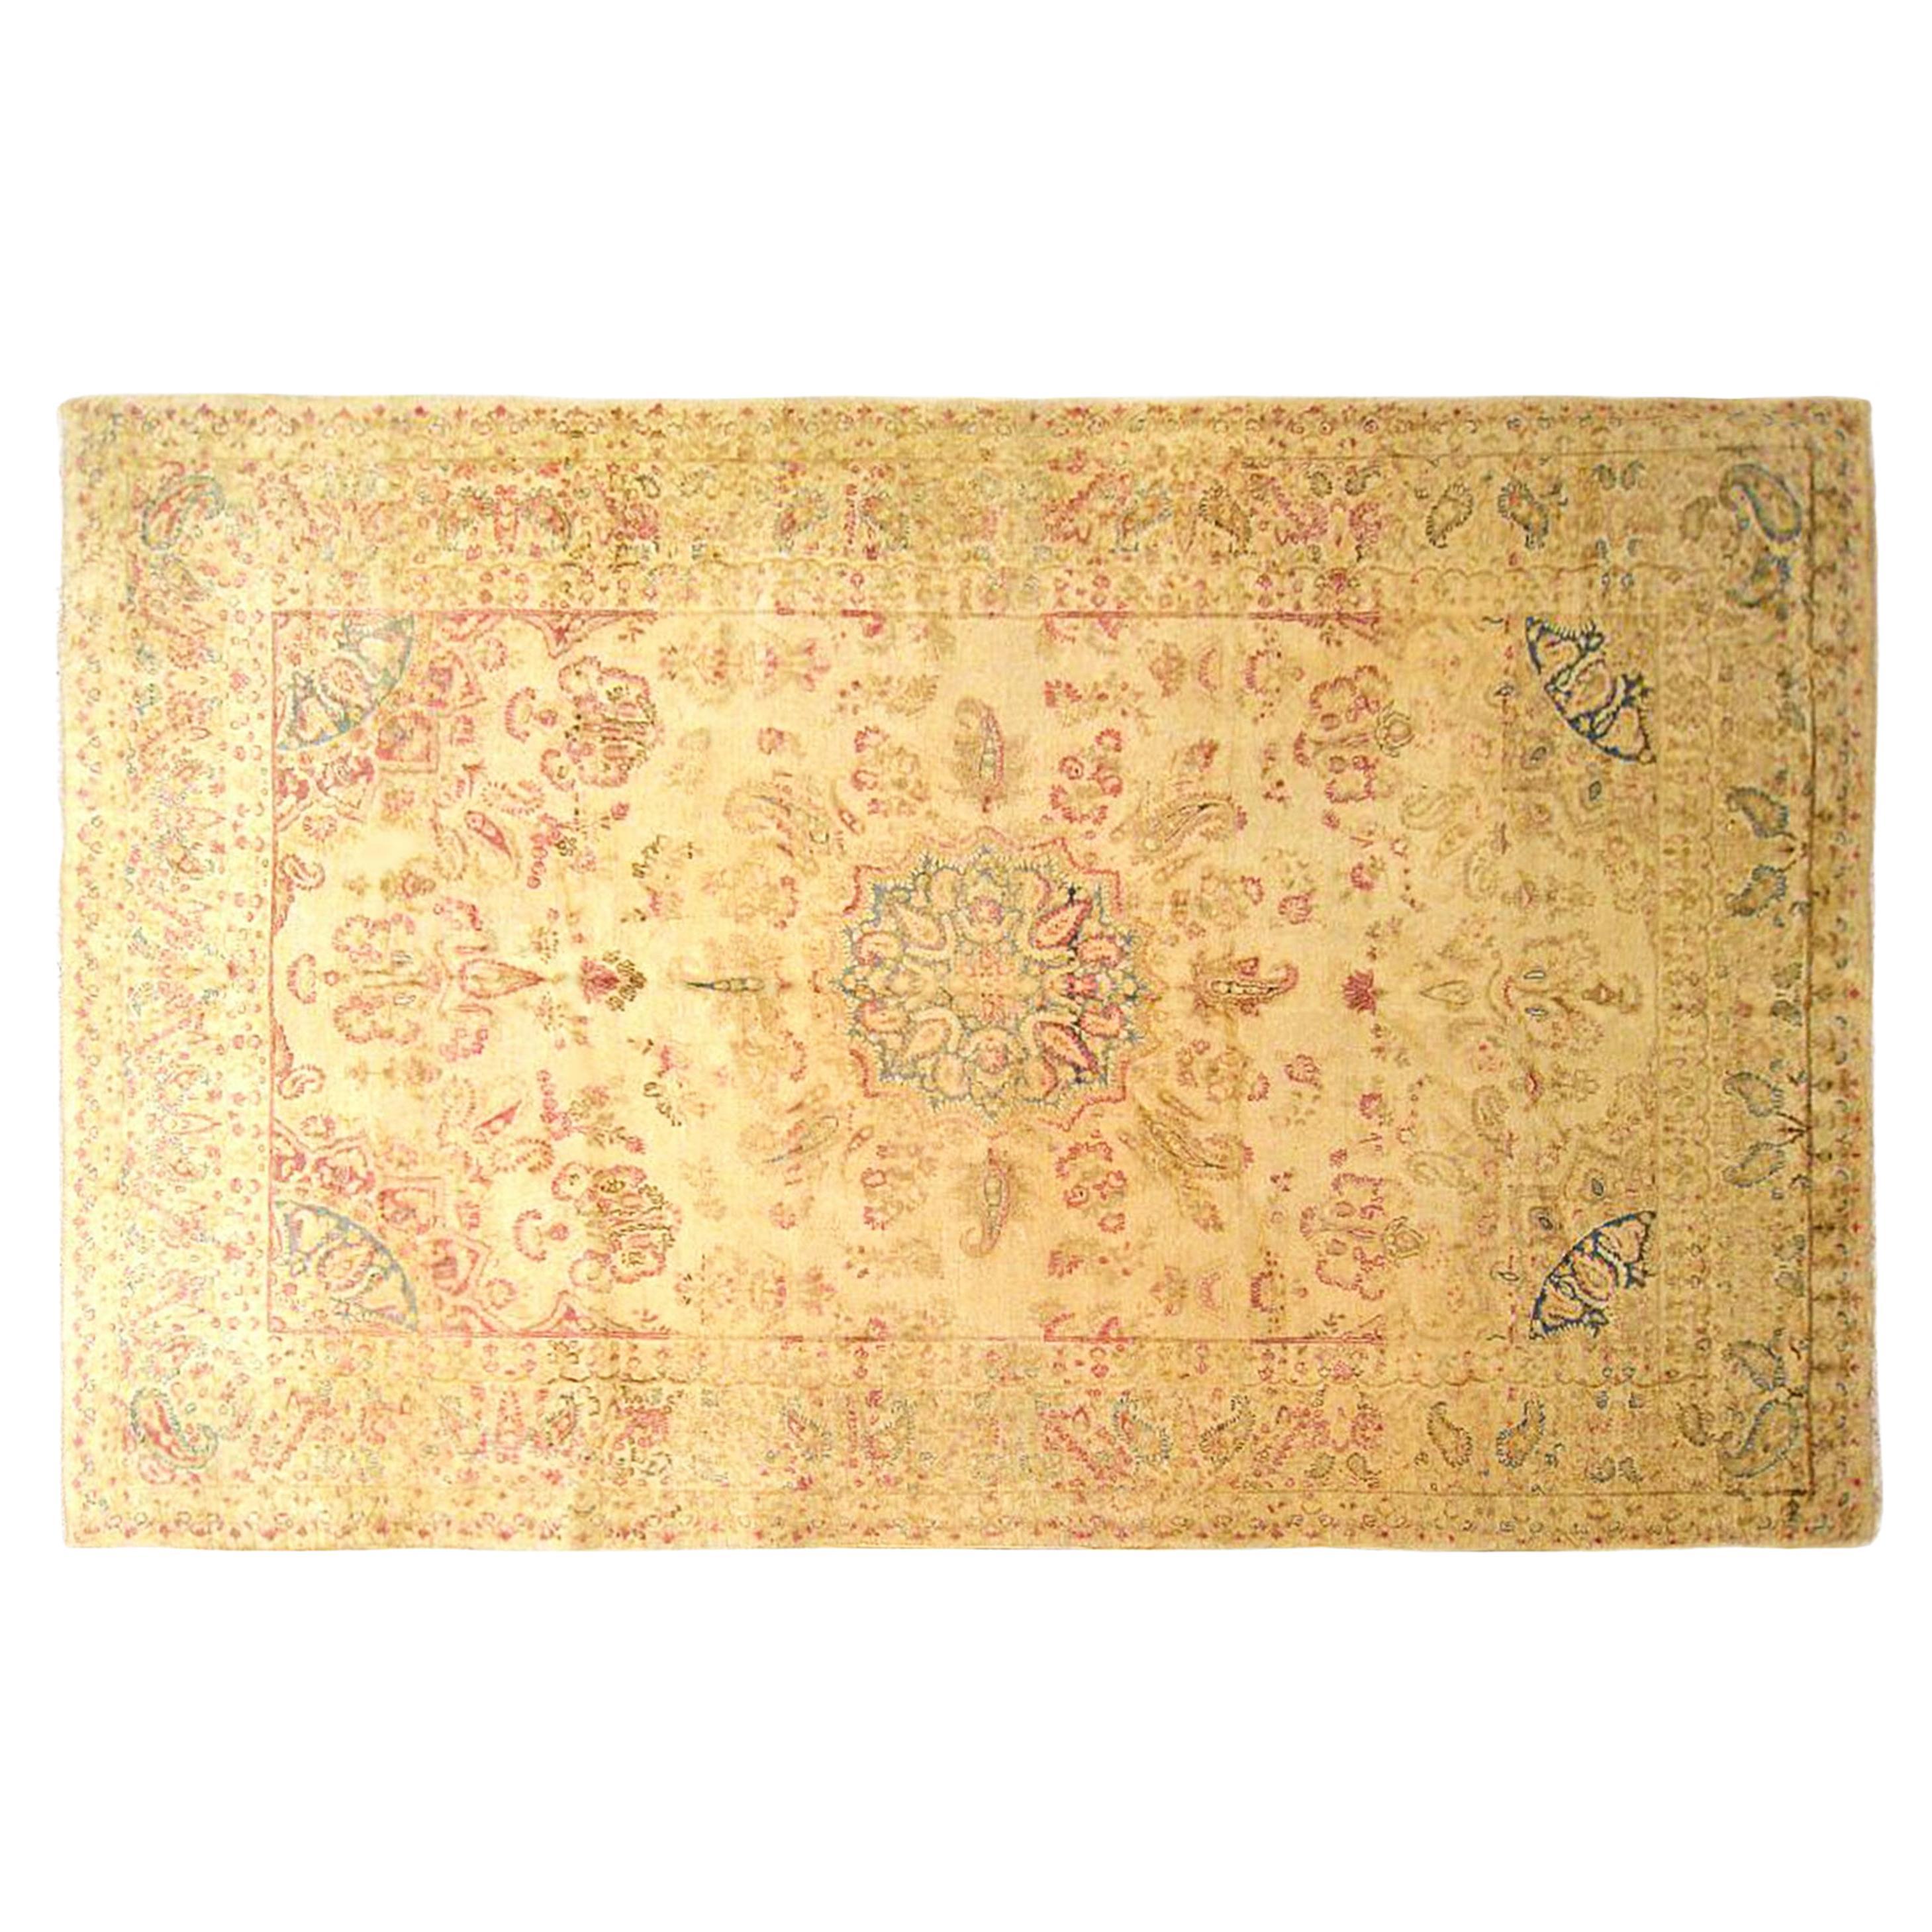 Antique Persian Decorative Oriental Kerman Rug in Room Size 